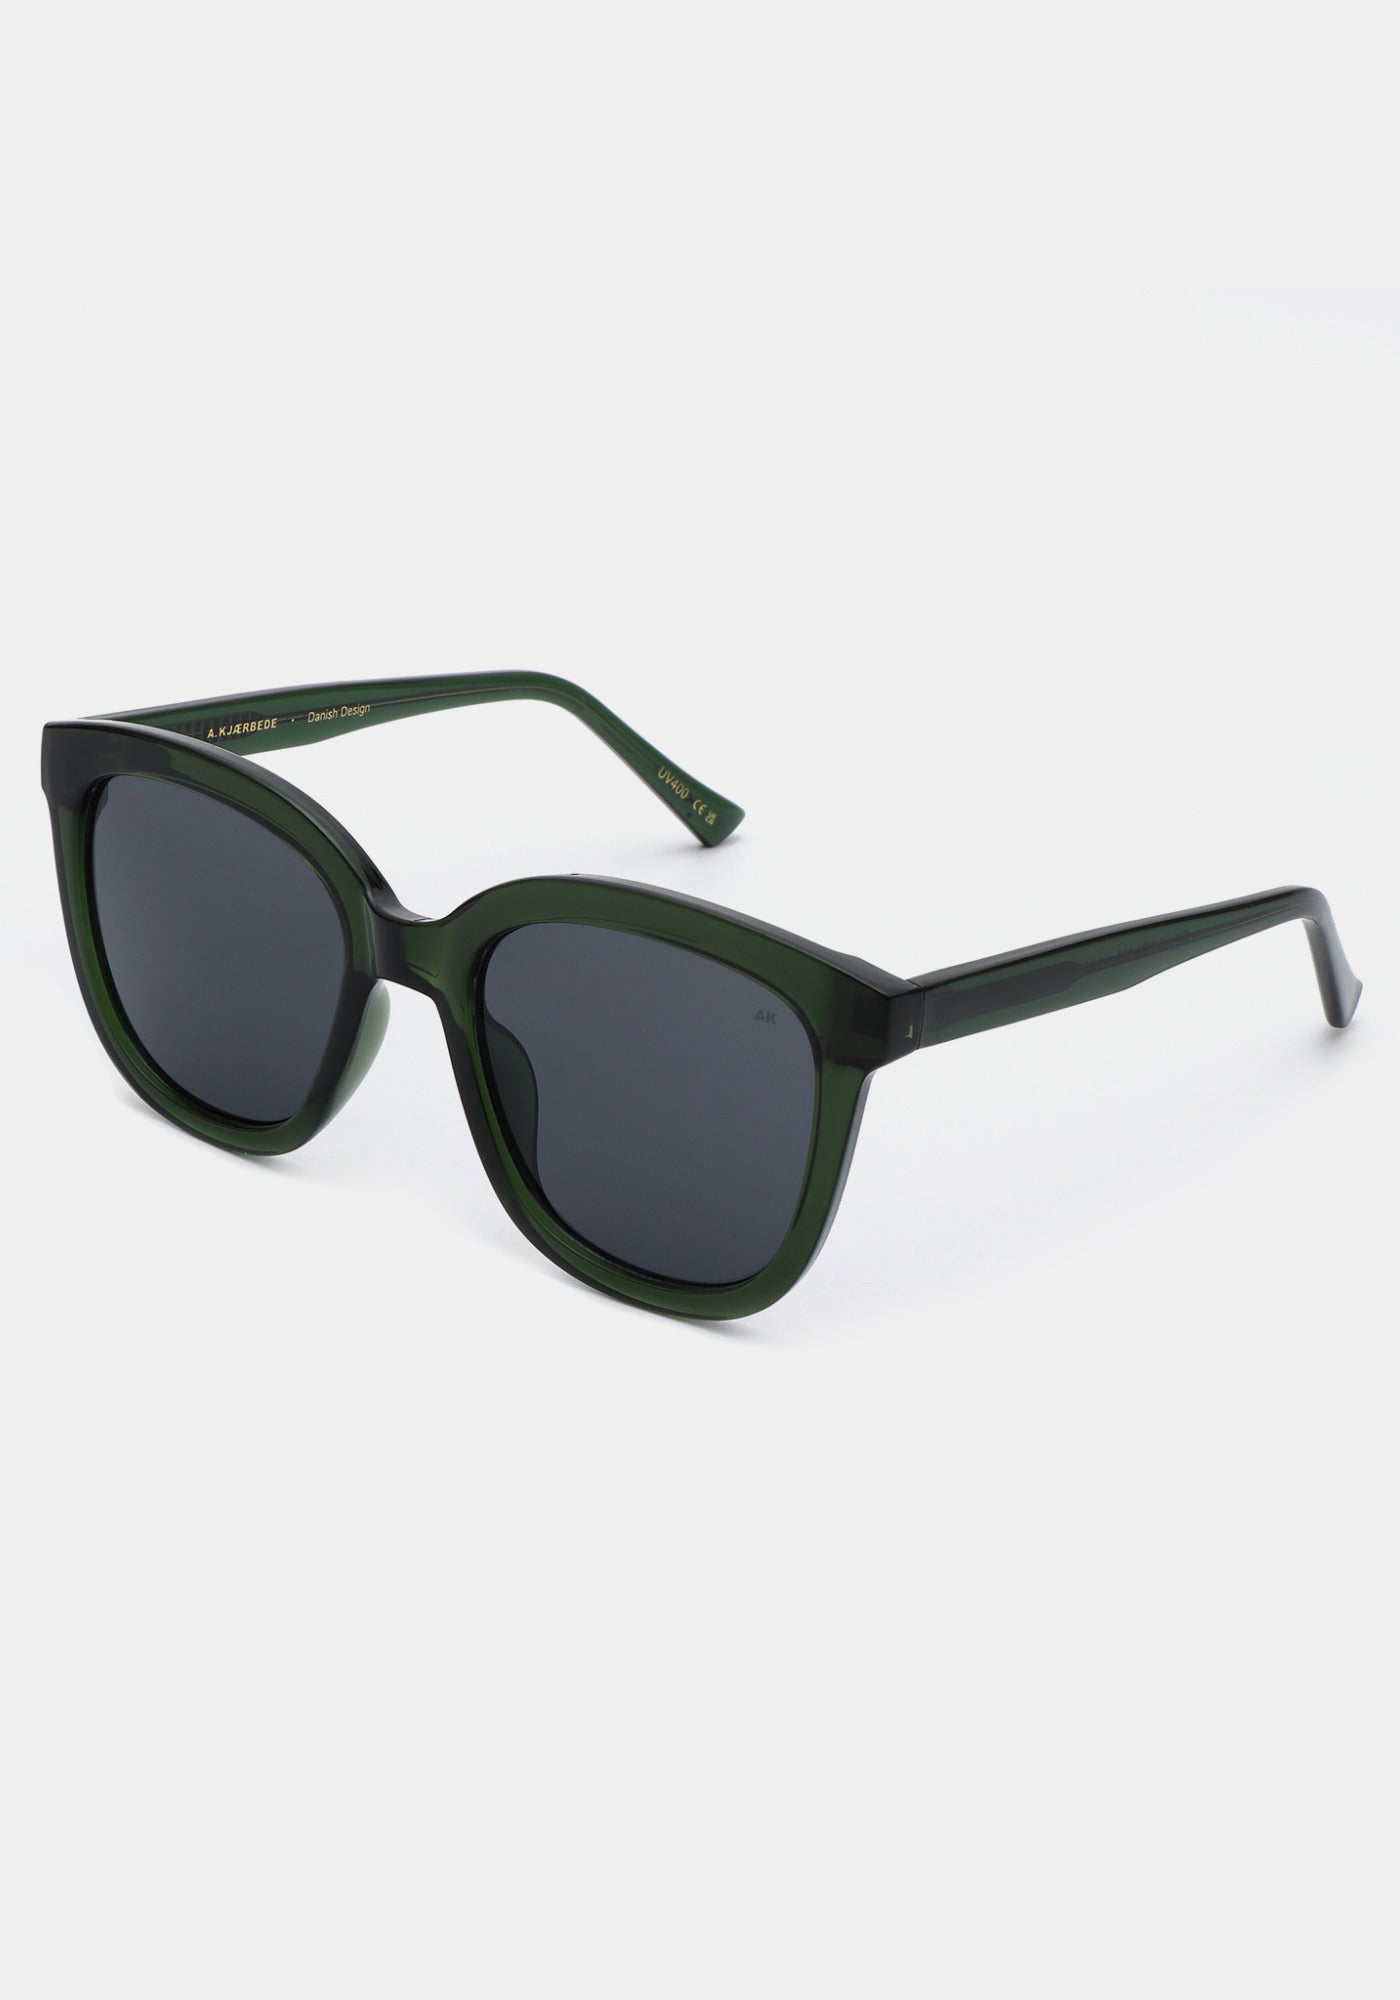 Les lunettes de soleil Billy dark green transparent de chez A.Kjaerbede